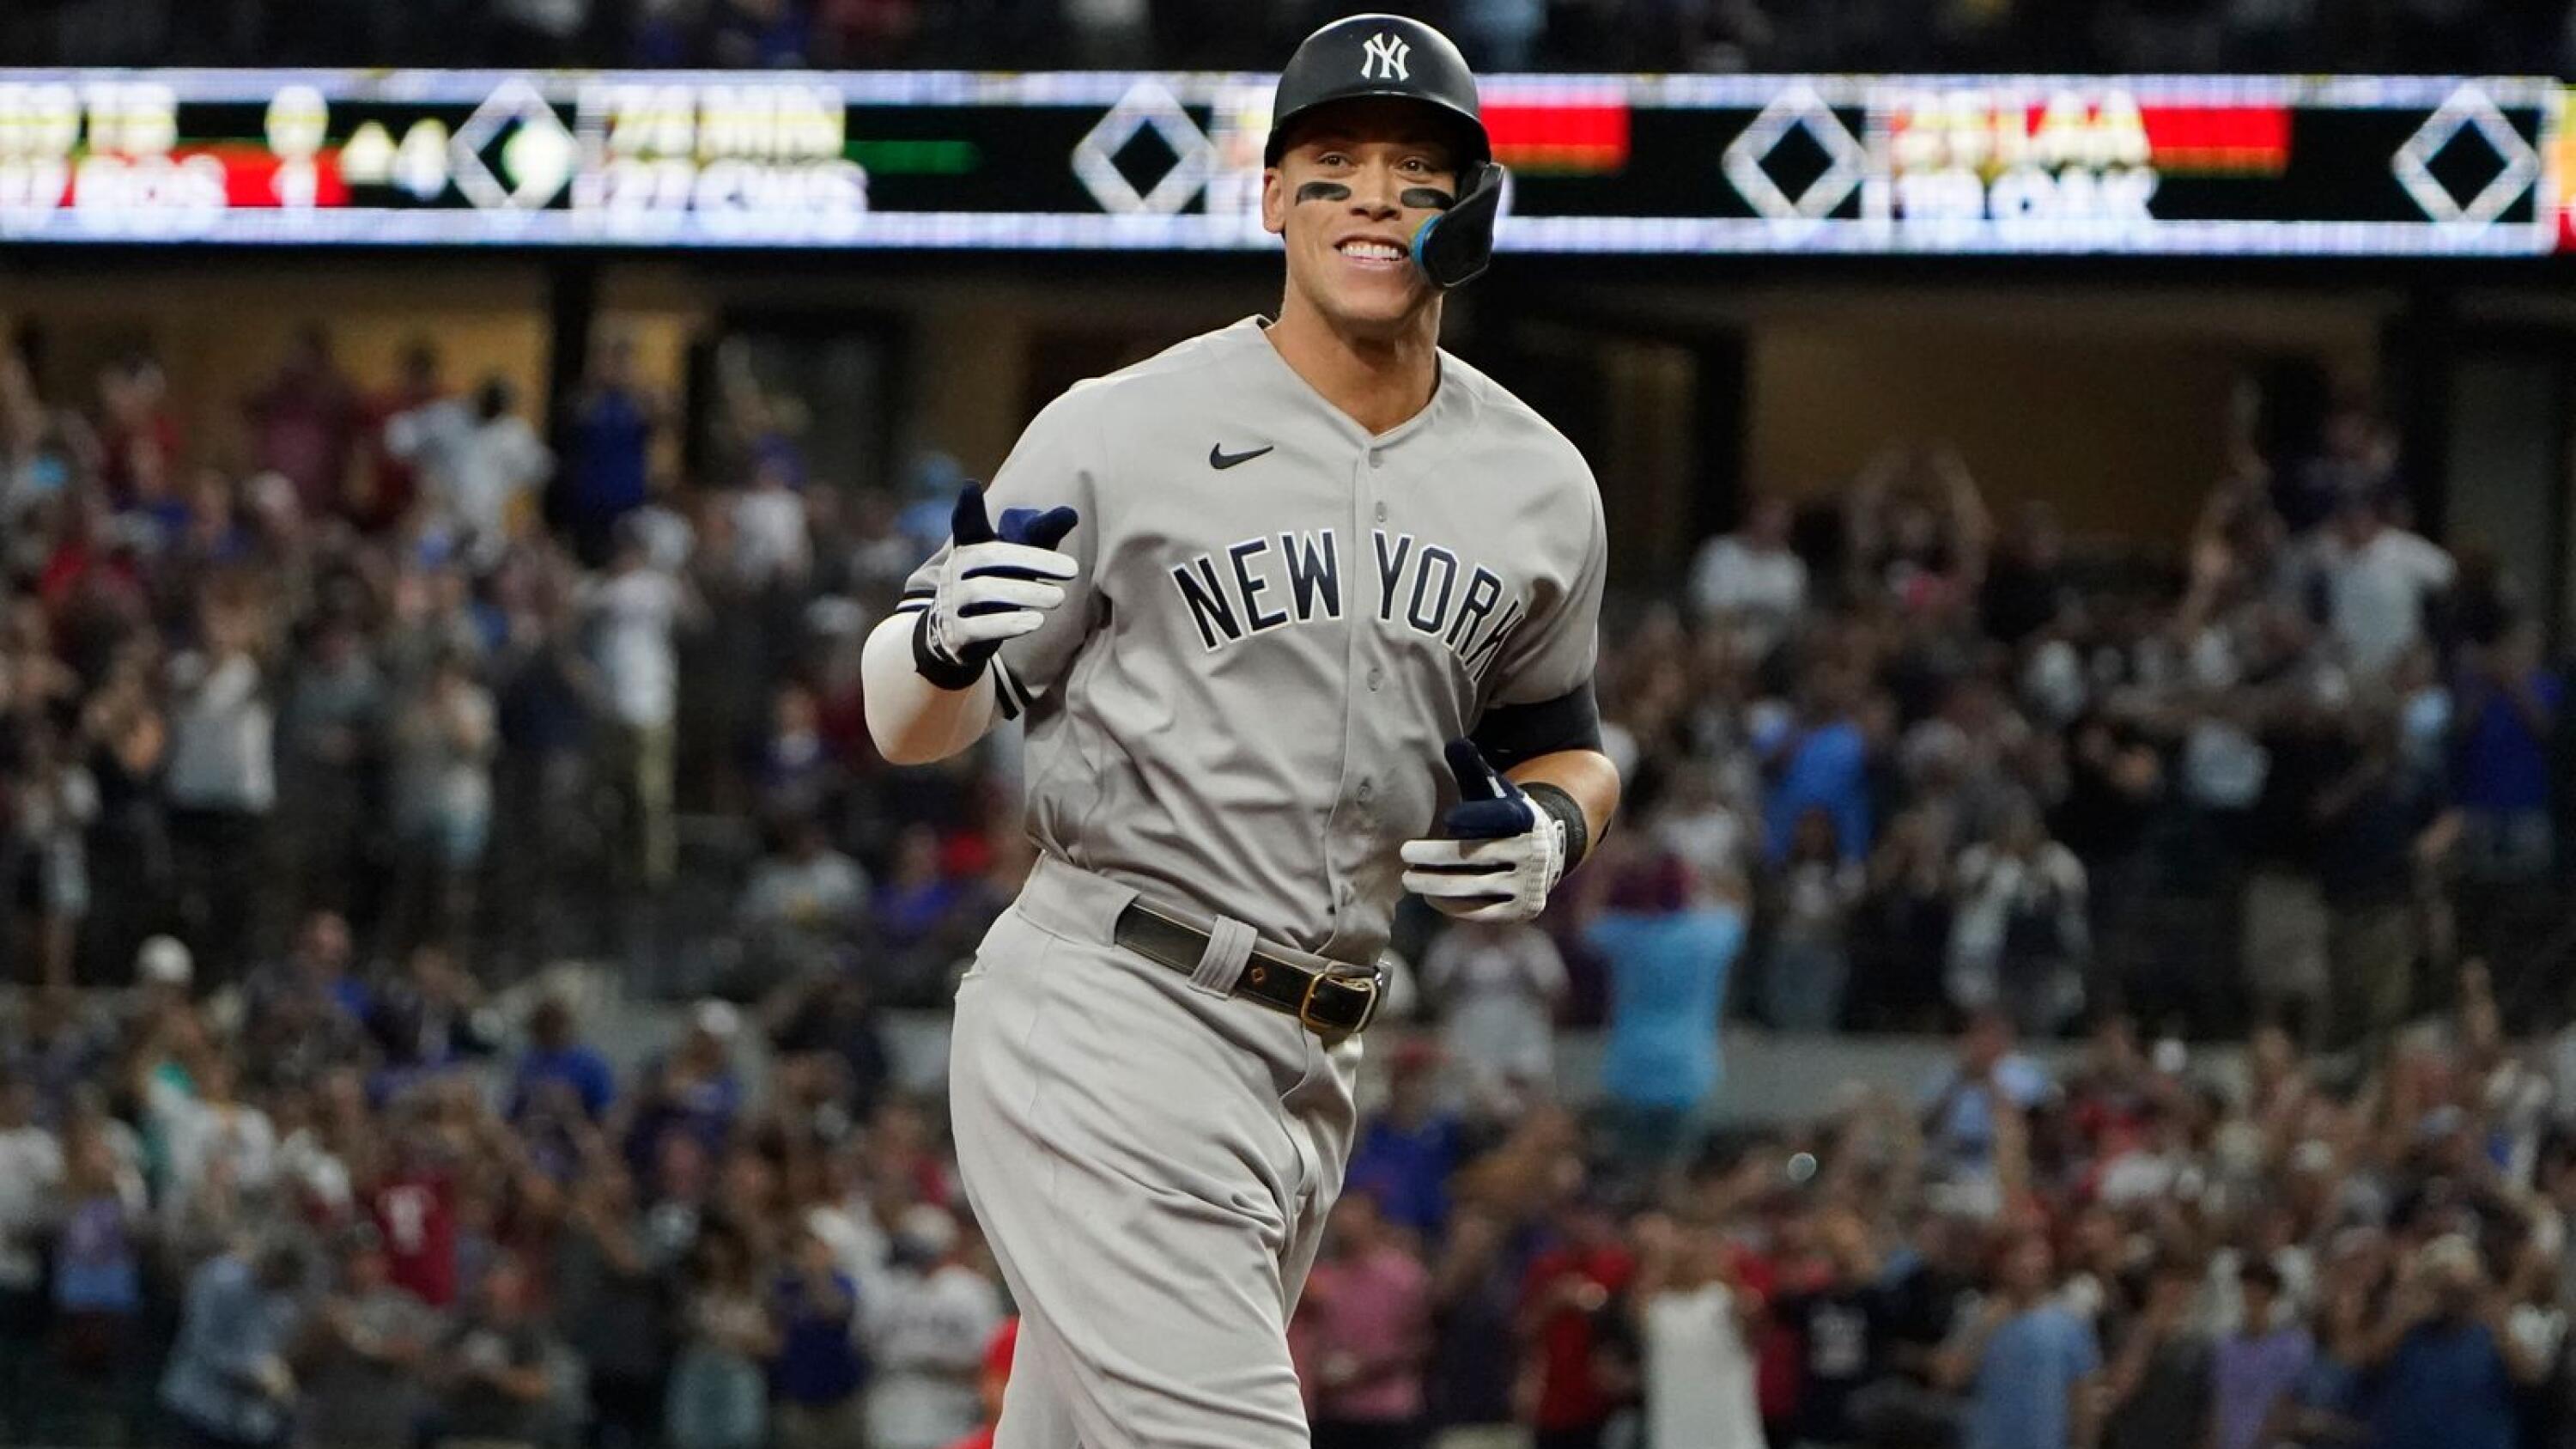 Yankees star Judge needs 1 homer to tie Maris' AL mark of 61